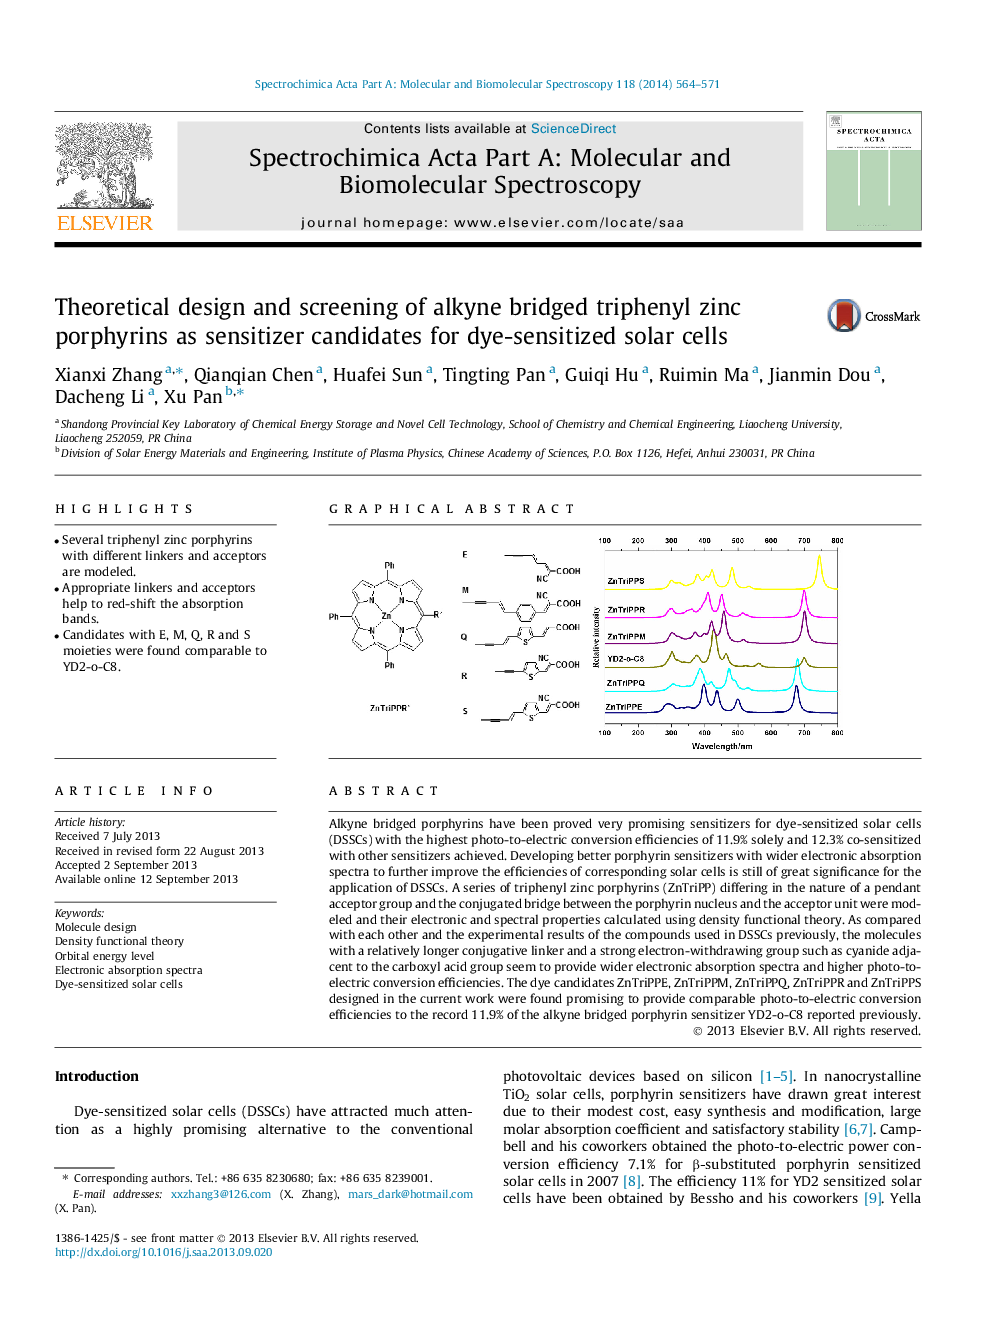 Theoretical design and screening of alkyne bridged triphenyl zinc porphyrins as sensitizer candidates for dye-sensitized solar cells